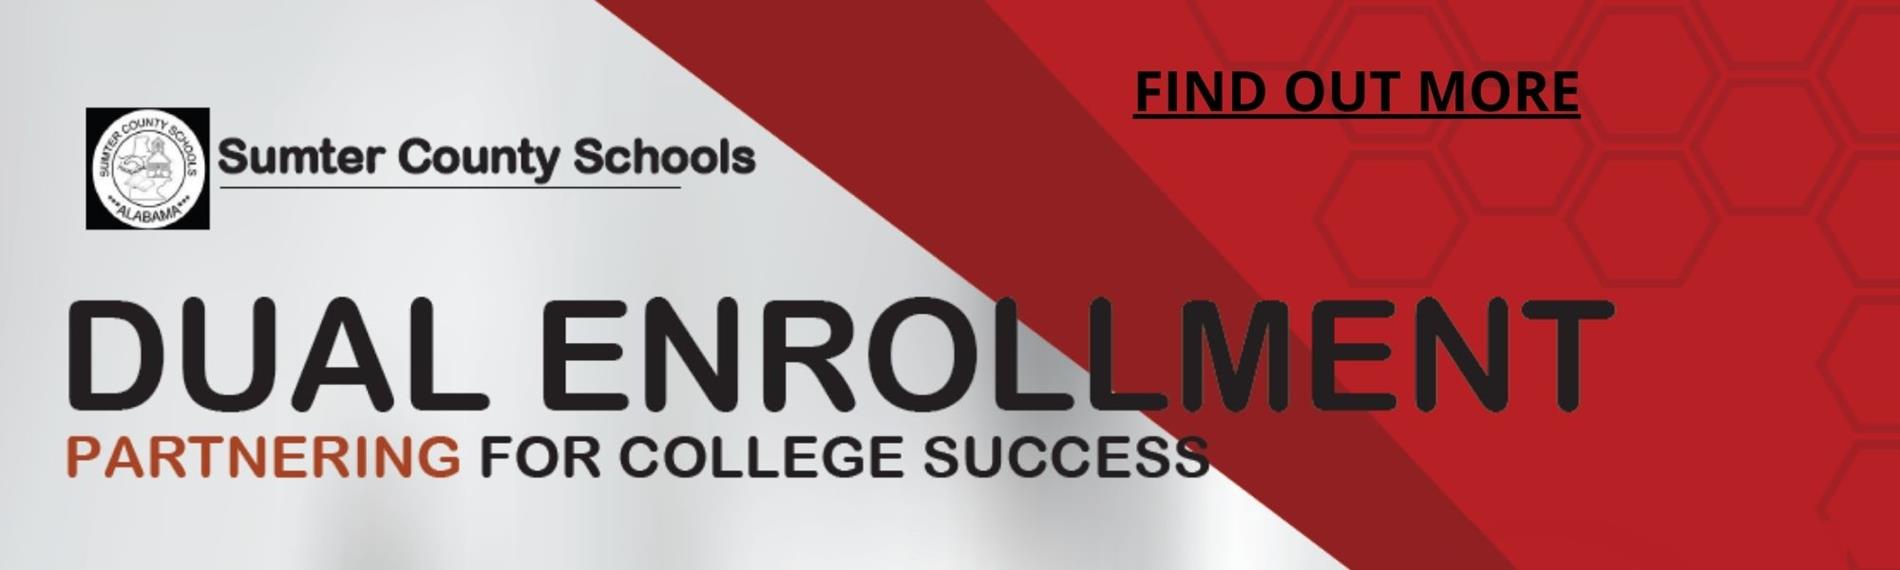 Dual Enrollment Partnering for College Success